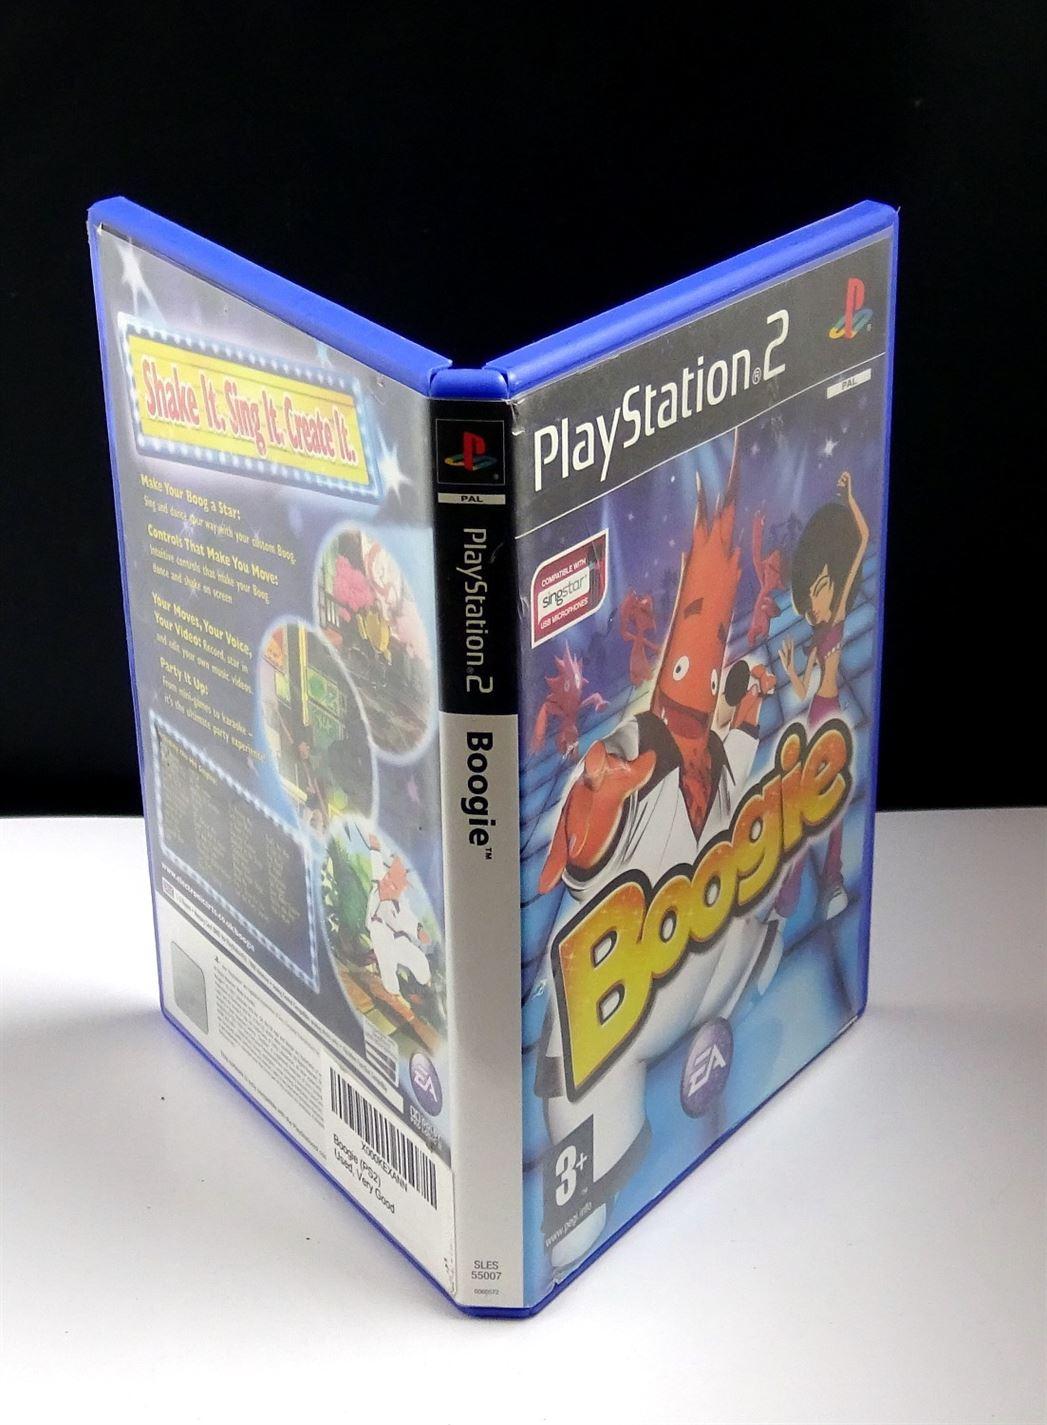 Boogie PS2 (Playstation 2) - UK Seller